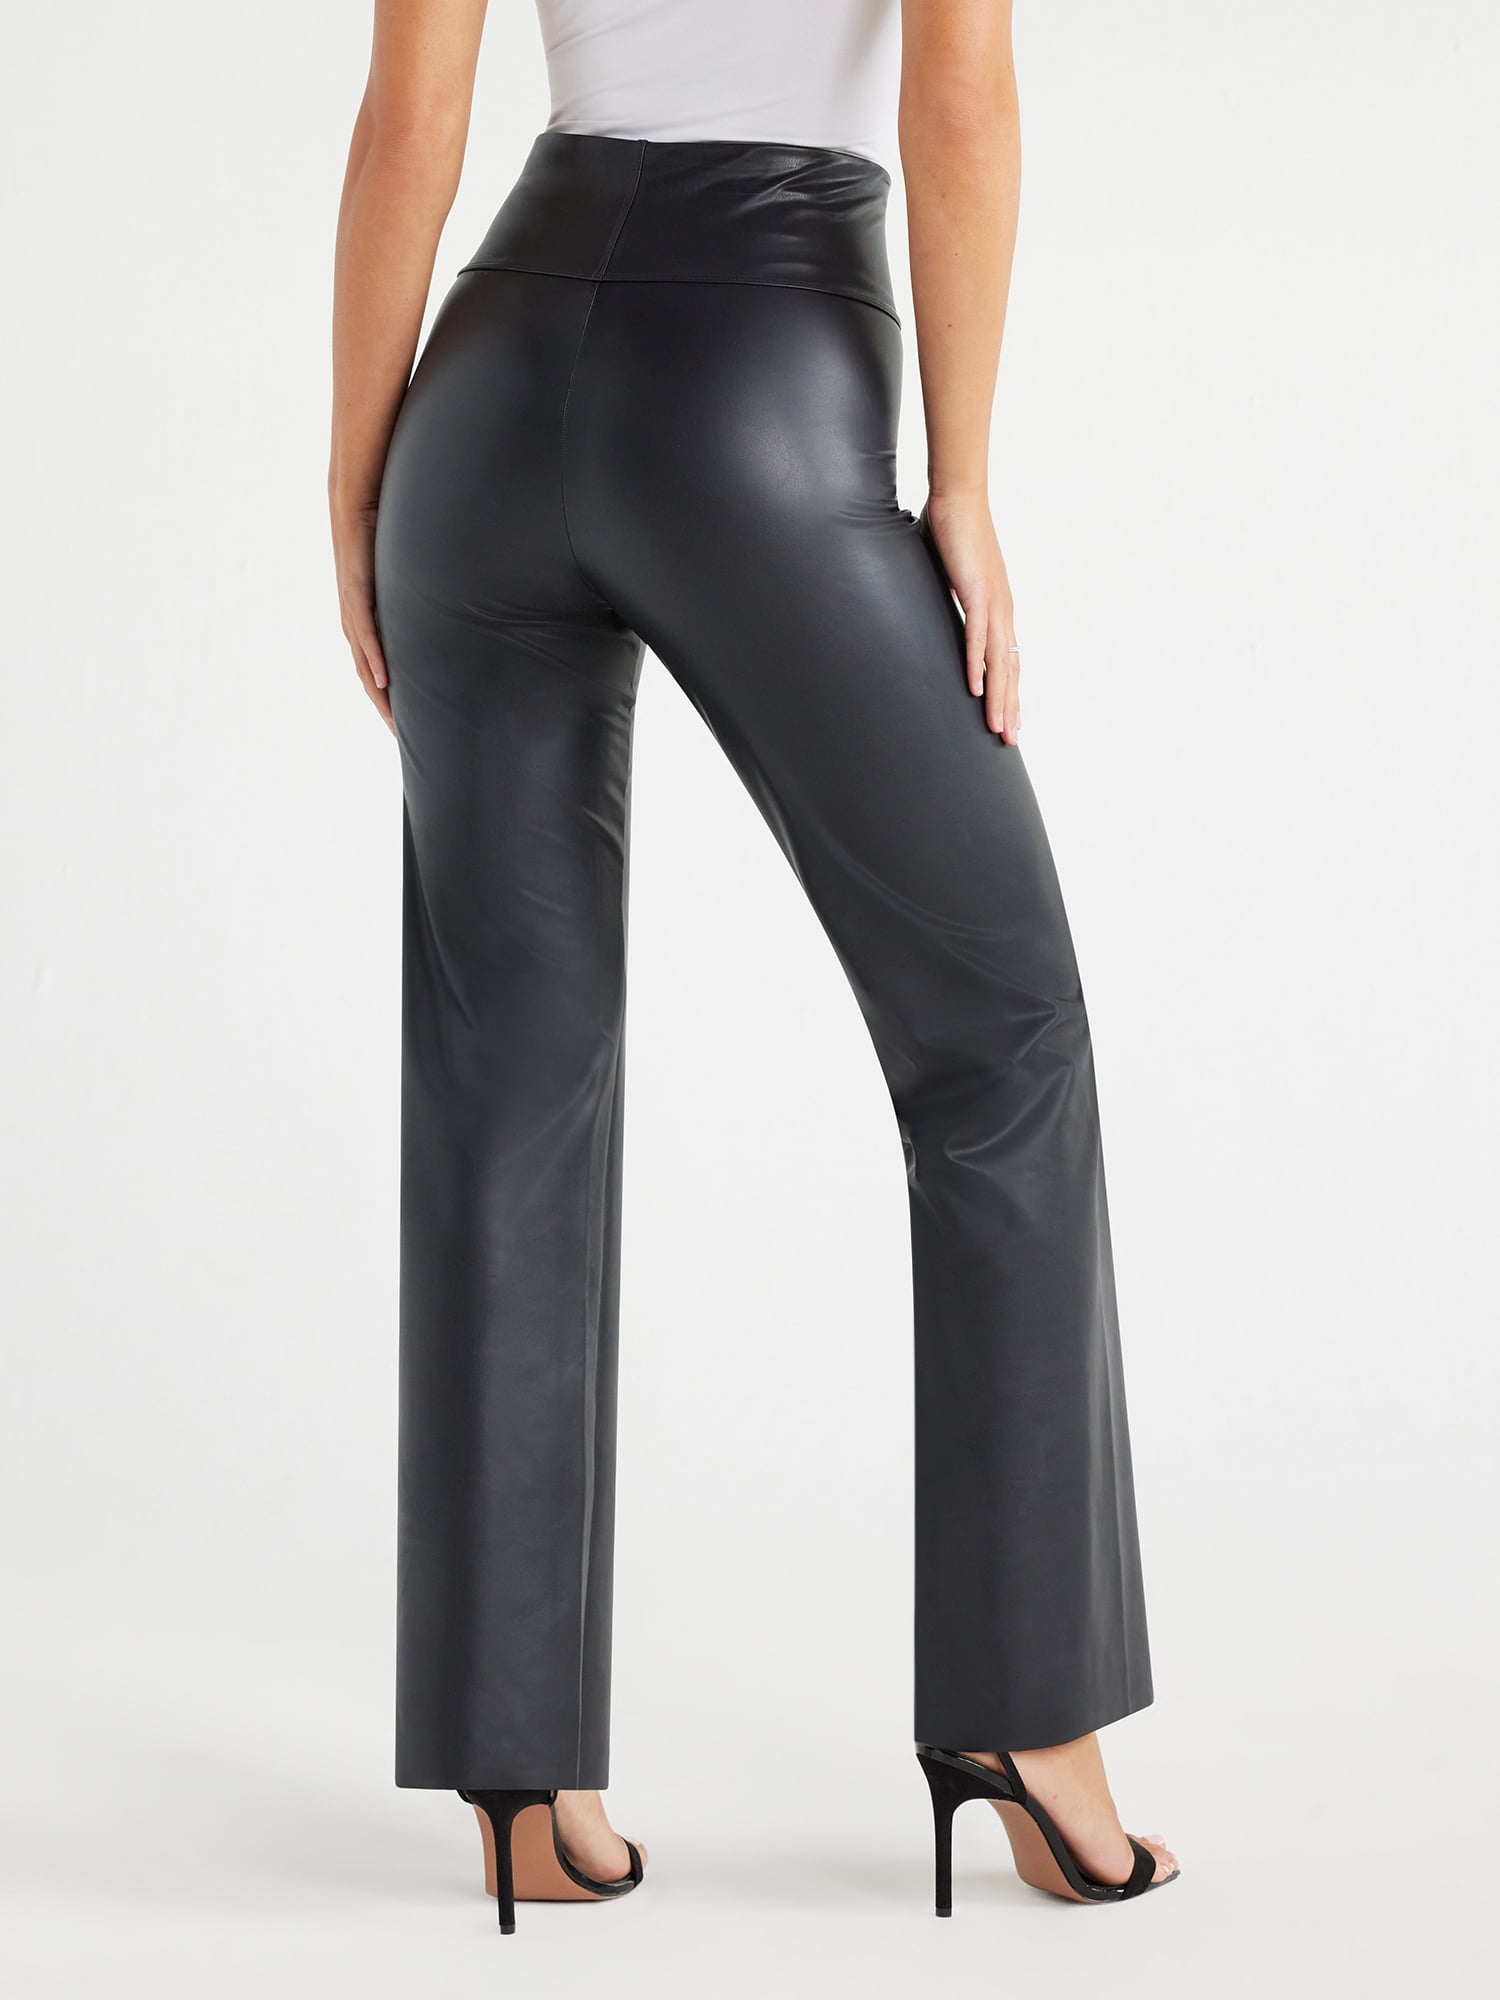 Sofia Jeans Women's Faux Leather Bootcut Pants, 32.5 Inseam, Sizes XS-2XL